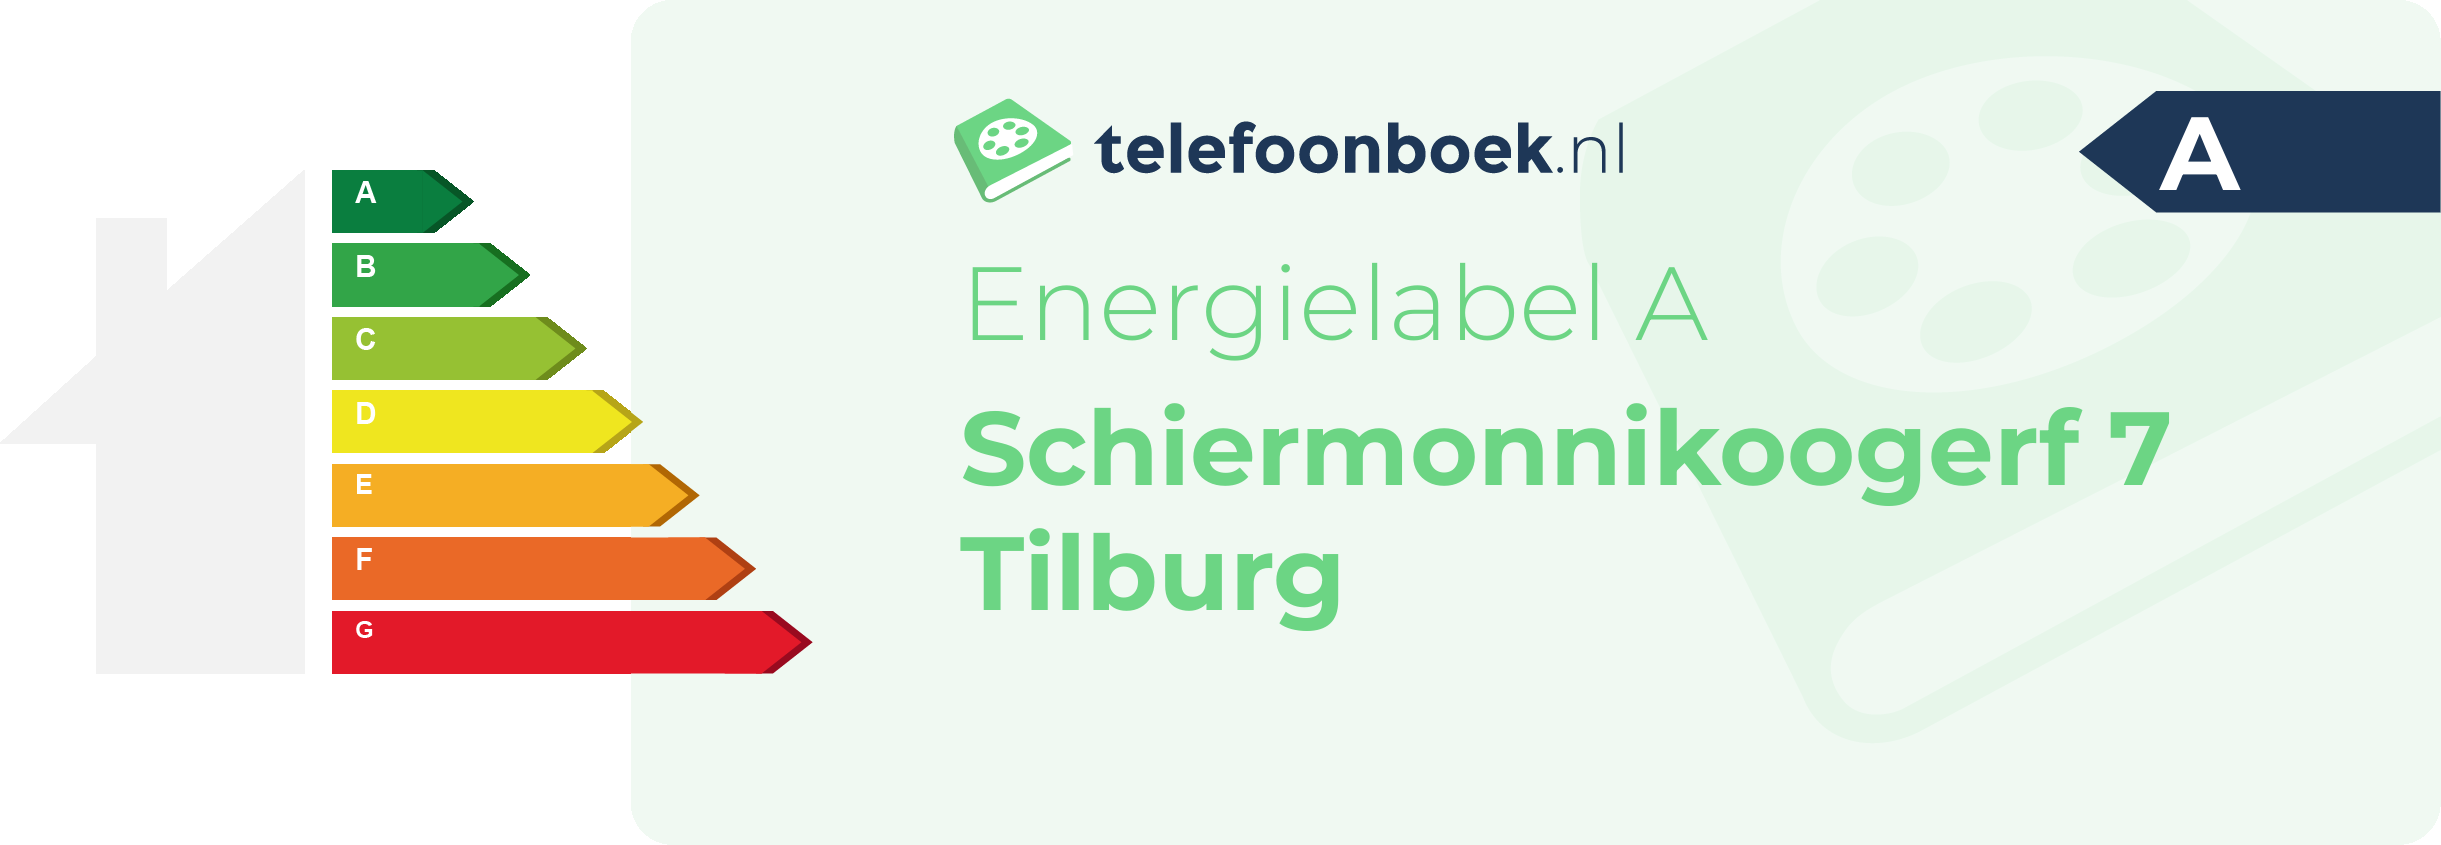 Energielabel Schiermonnikoogerf 7 Tilburg